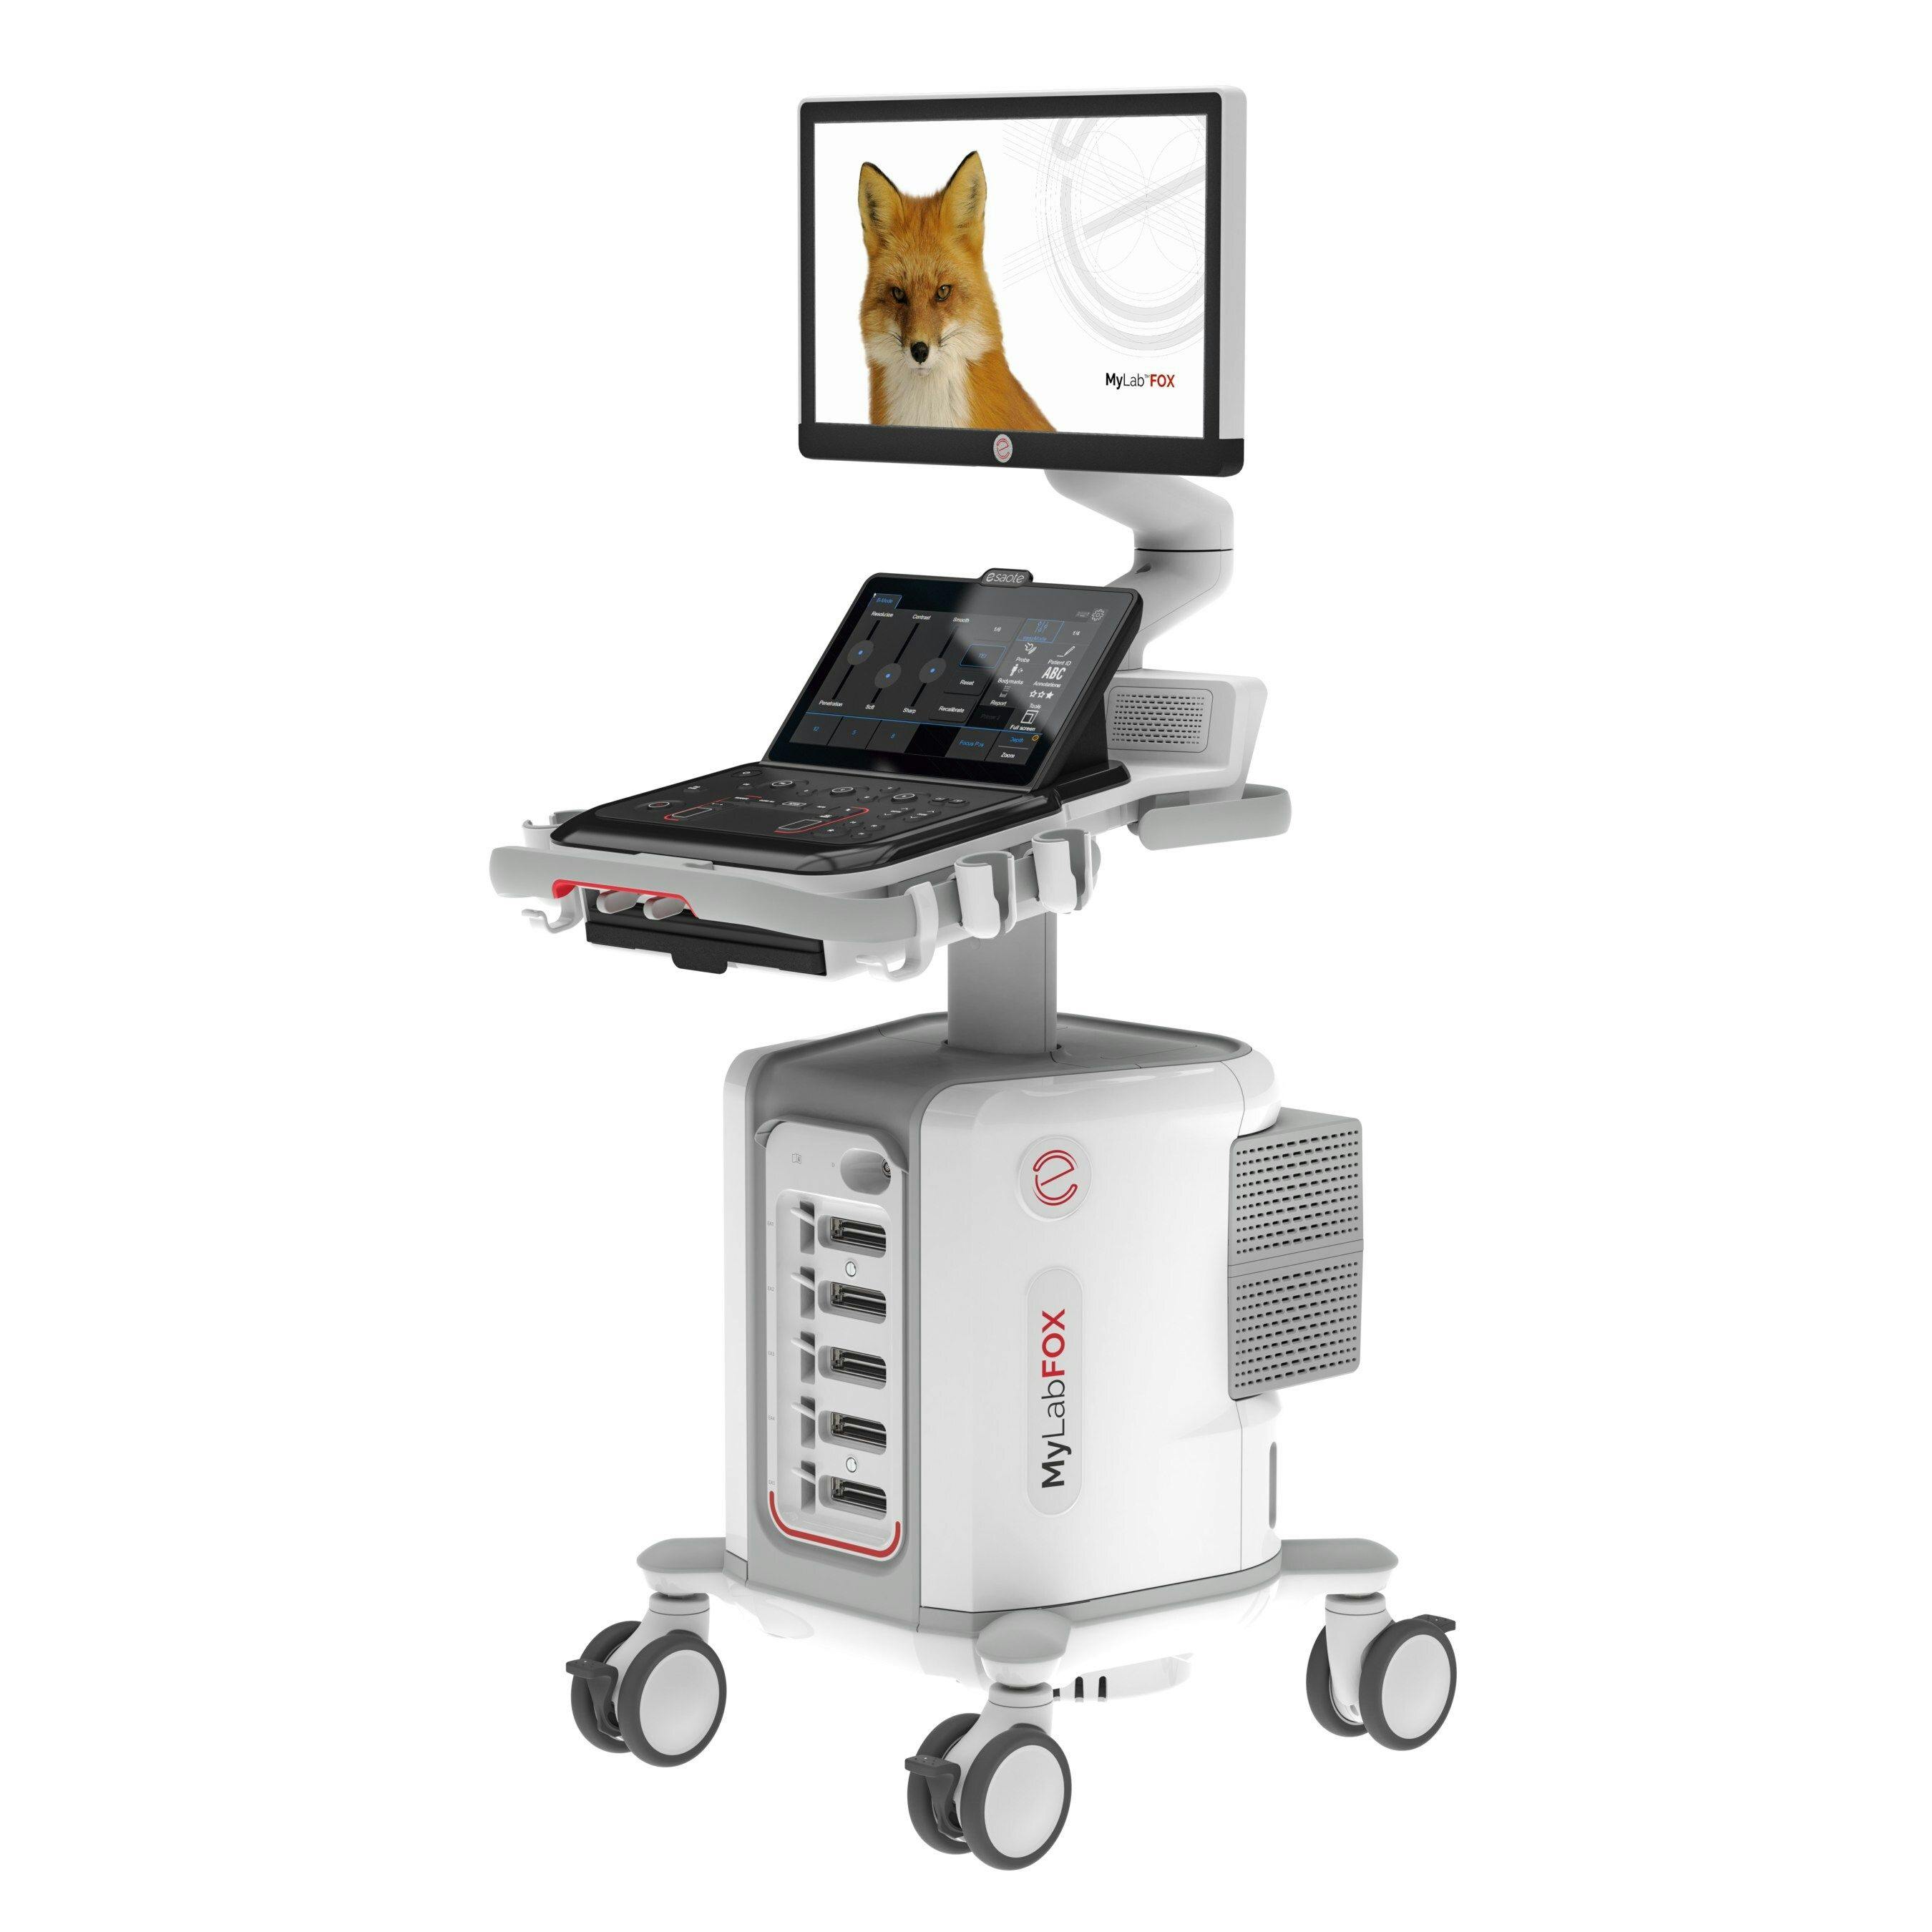 Ultrasound system for veterinary imaging